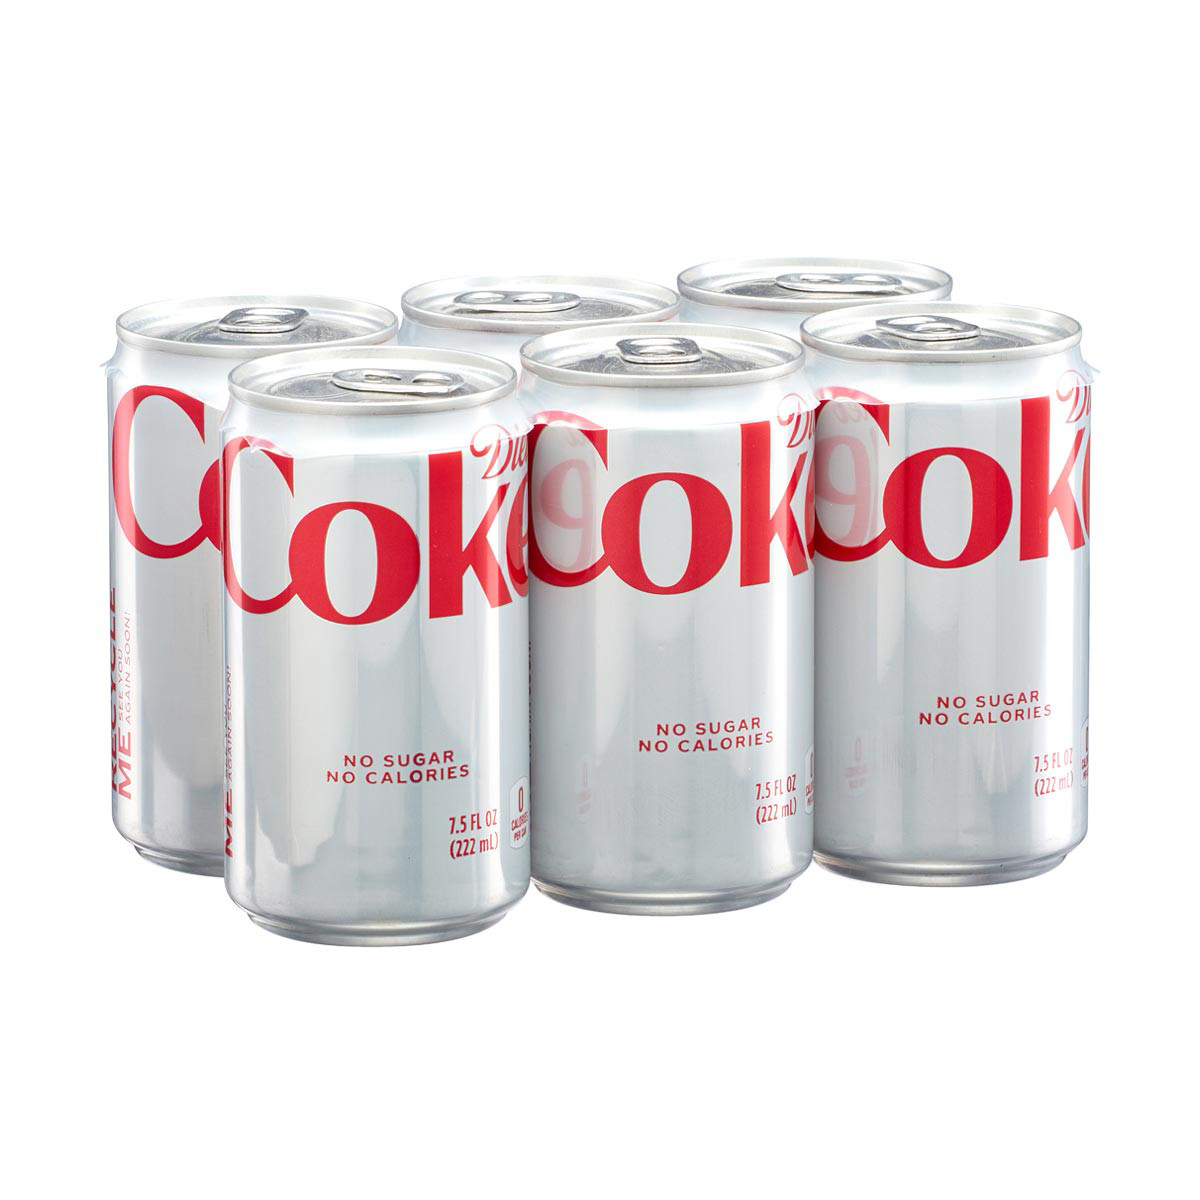 Coca-Cola Mini Soda Pop Soft Drink, 7.5 fl oz, 6 Pack Cans 